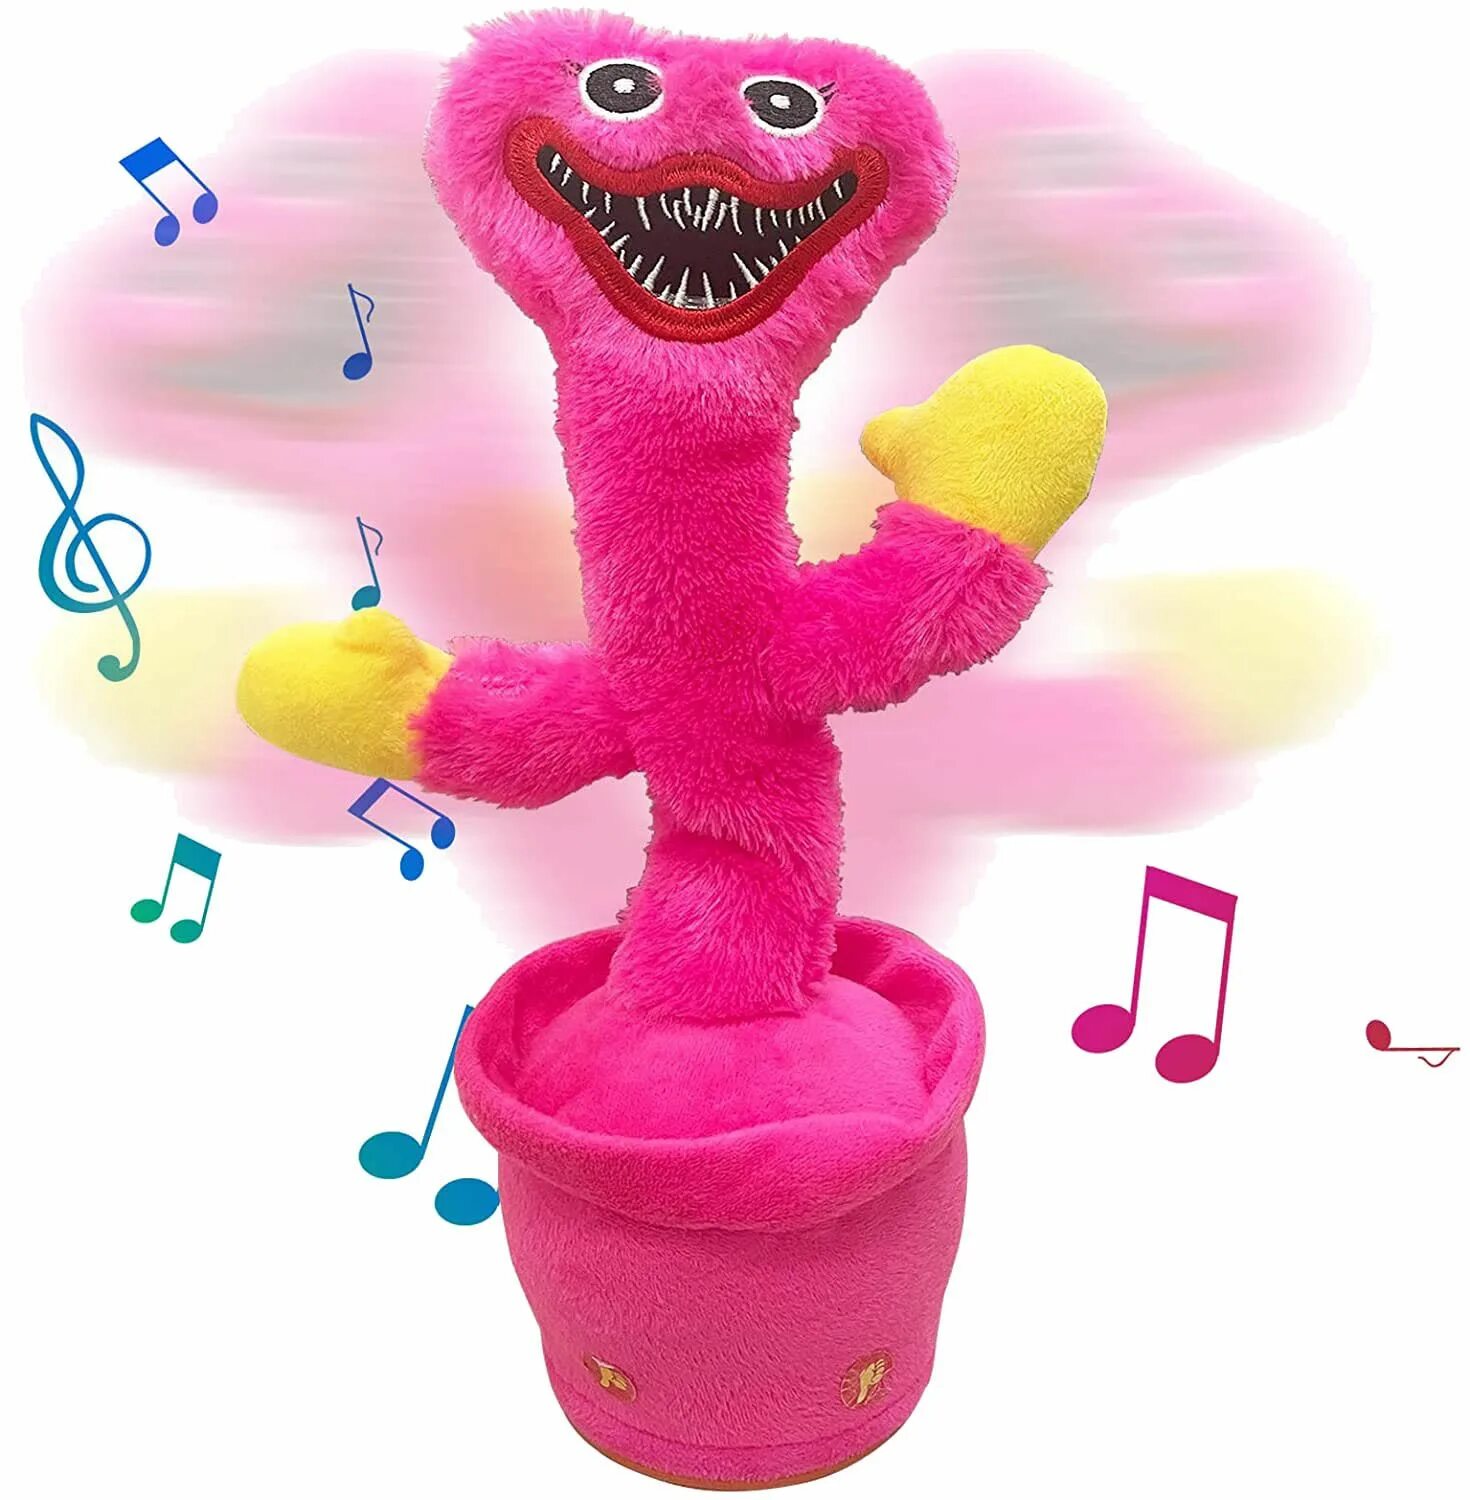 Кисси Мисси Танцующий Кактус. Танцующий Хаги ваги игрушка Кактус. Кисси Мисси розовая игрушка. Танцующая мягкая игрушка музыкальная.